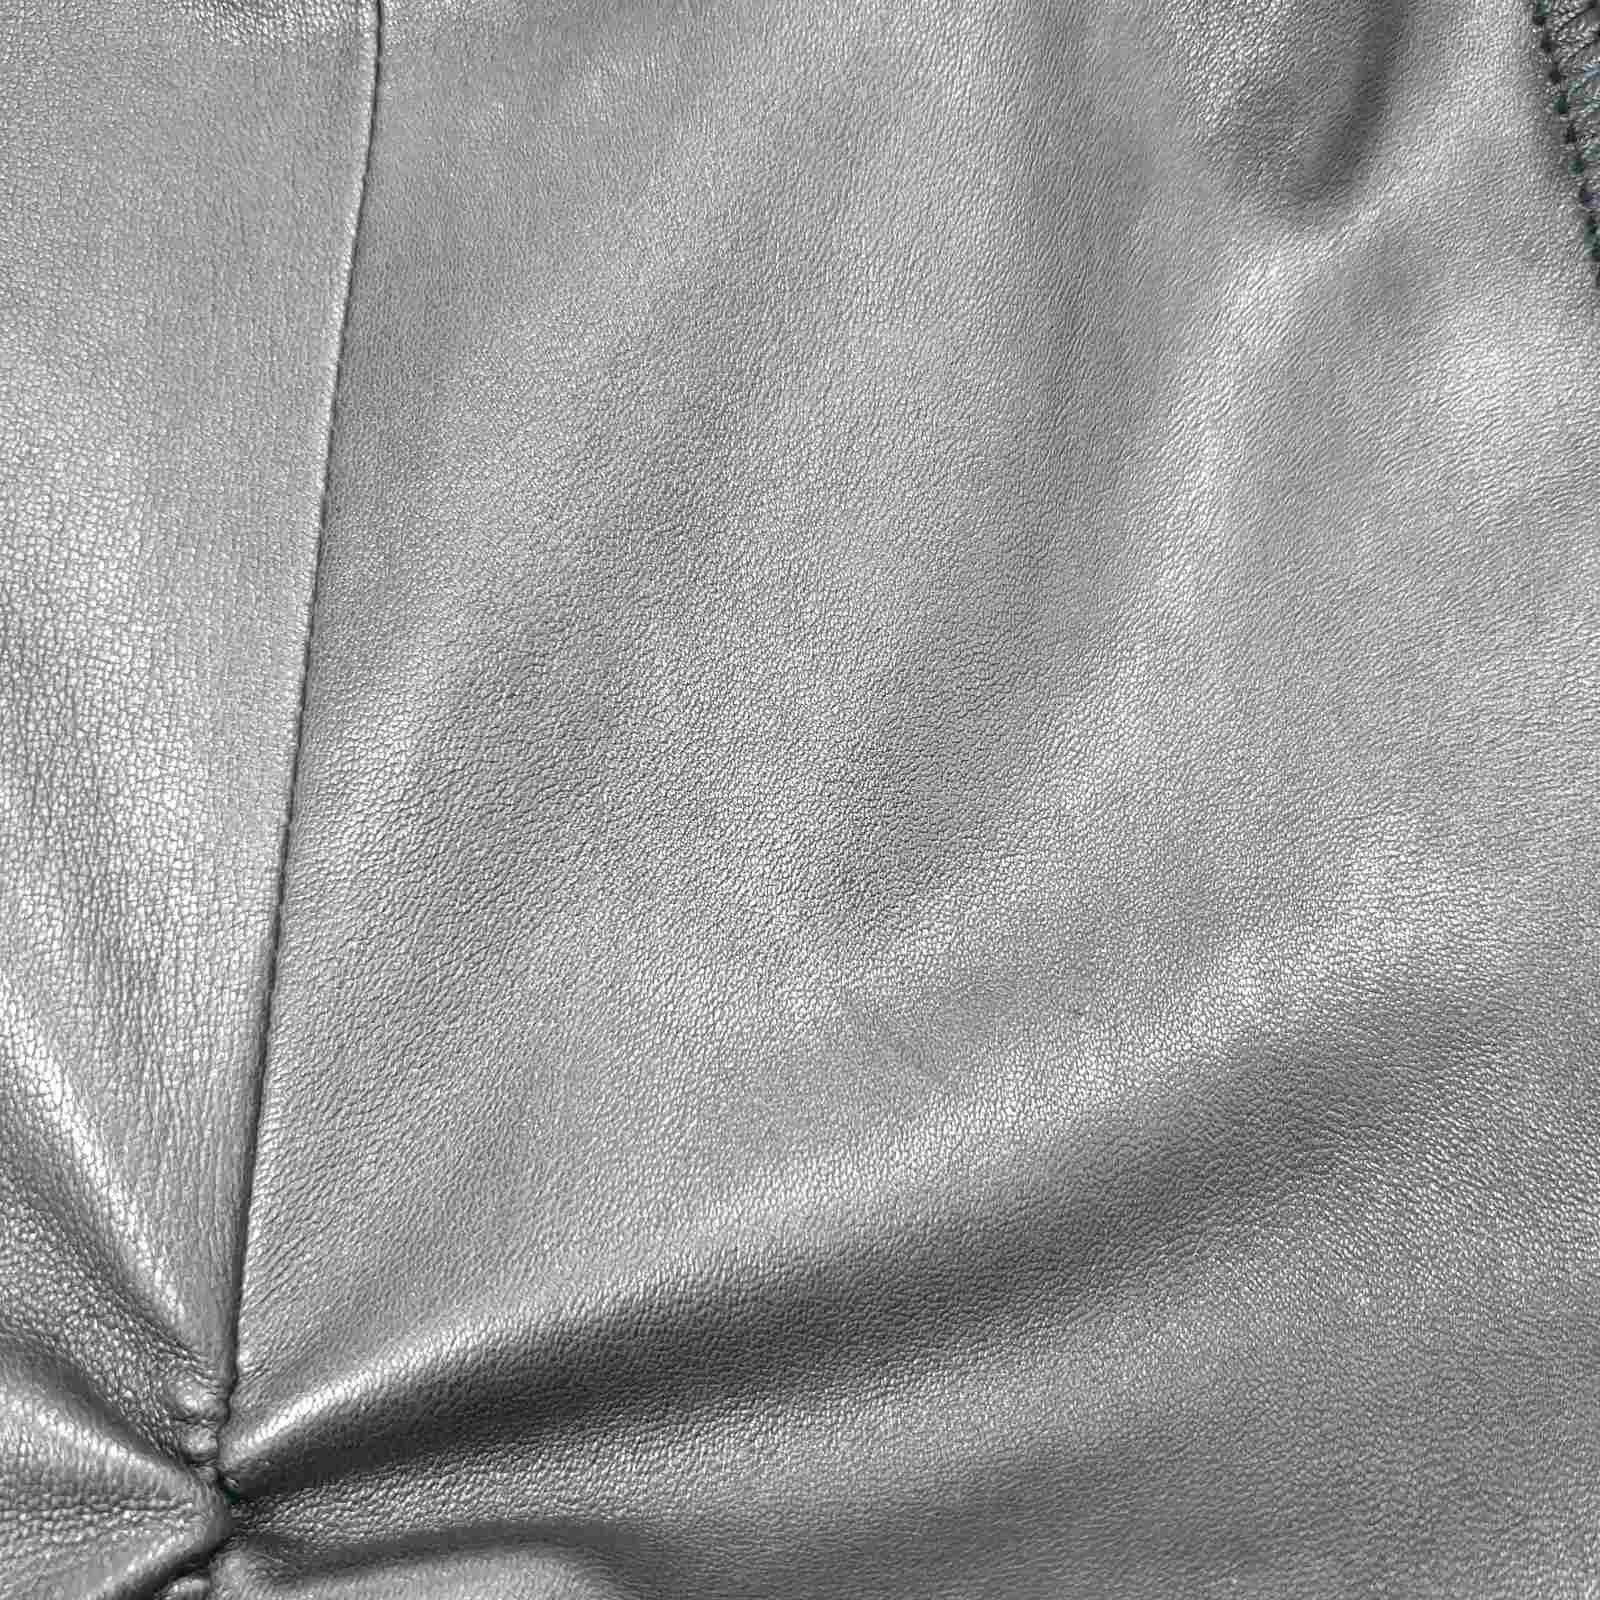 Tom Ford Black Leather Jacket Skirt Suit For Sale 7